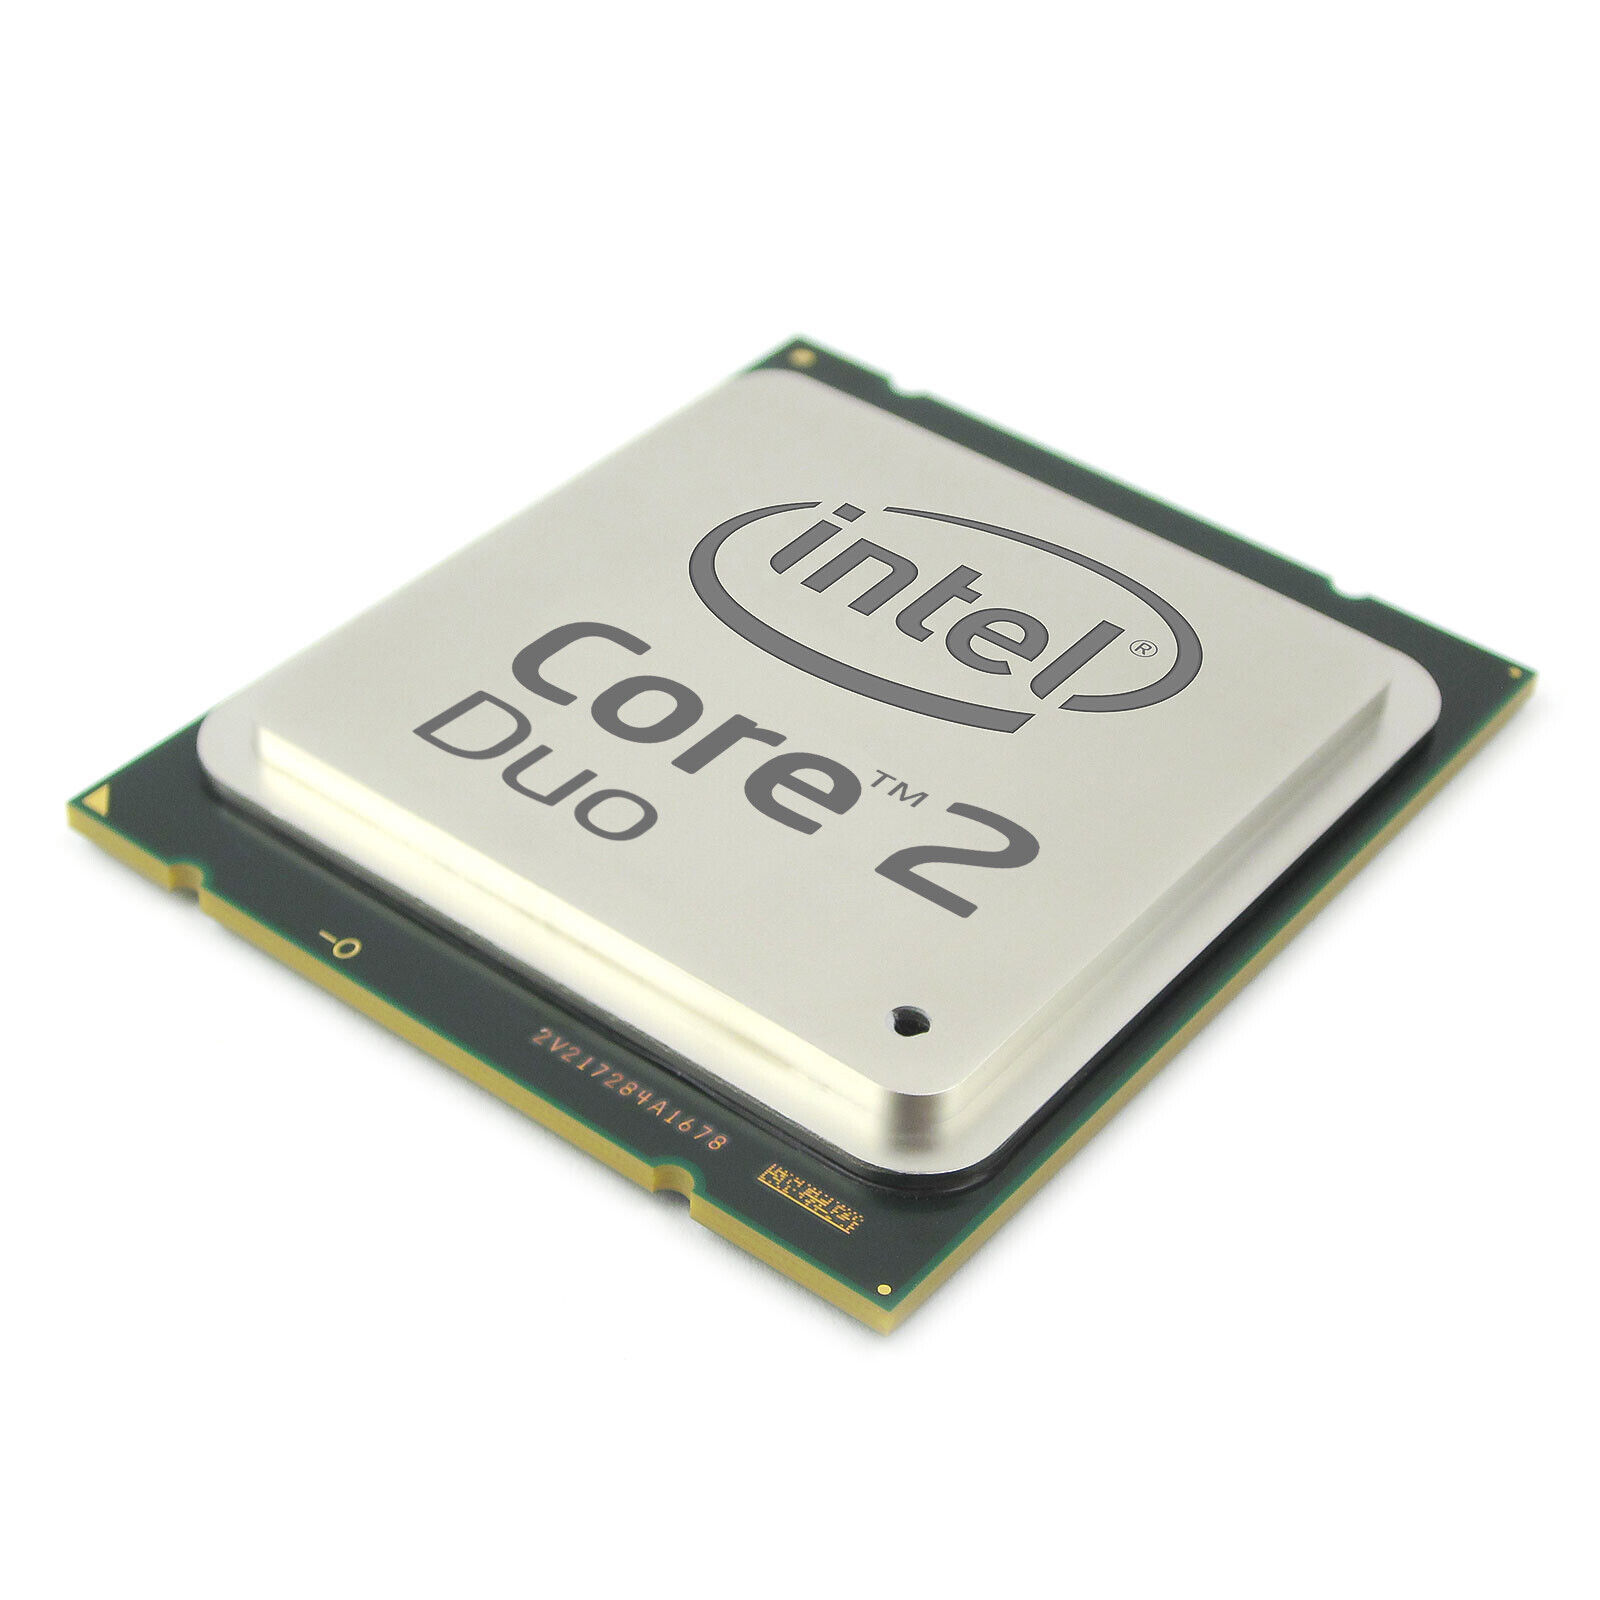 Intel Core 2 Duo E8500 3.16GHz Dual Core LGA 775/Socket T Processor